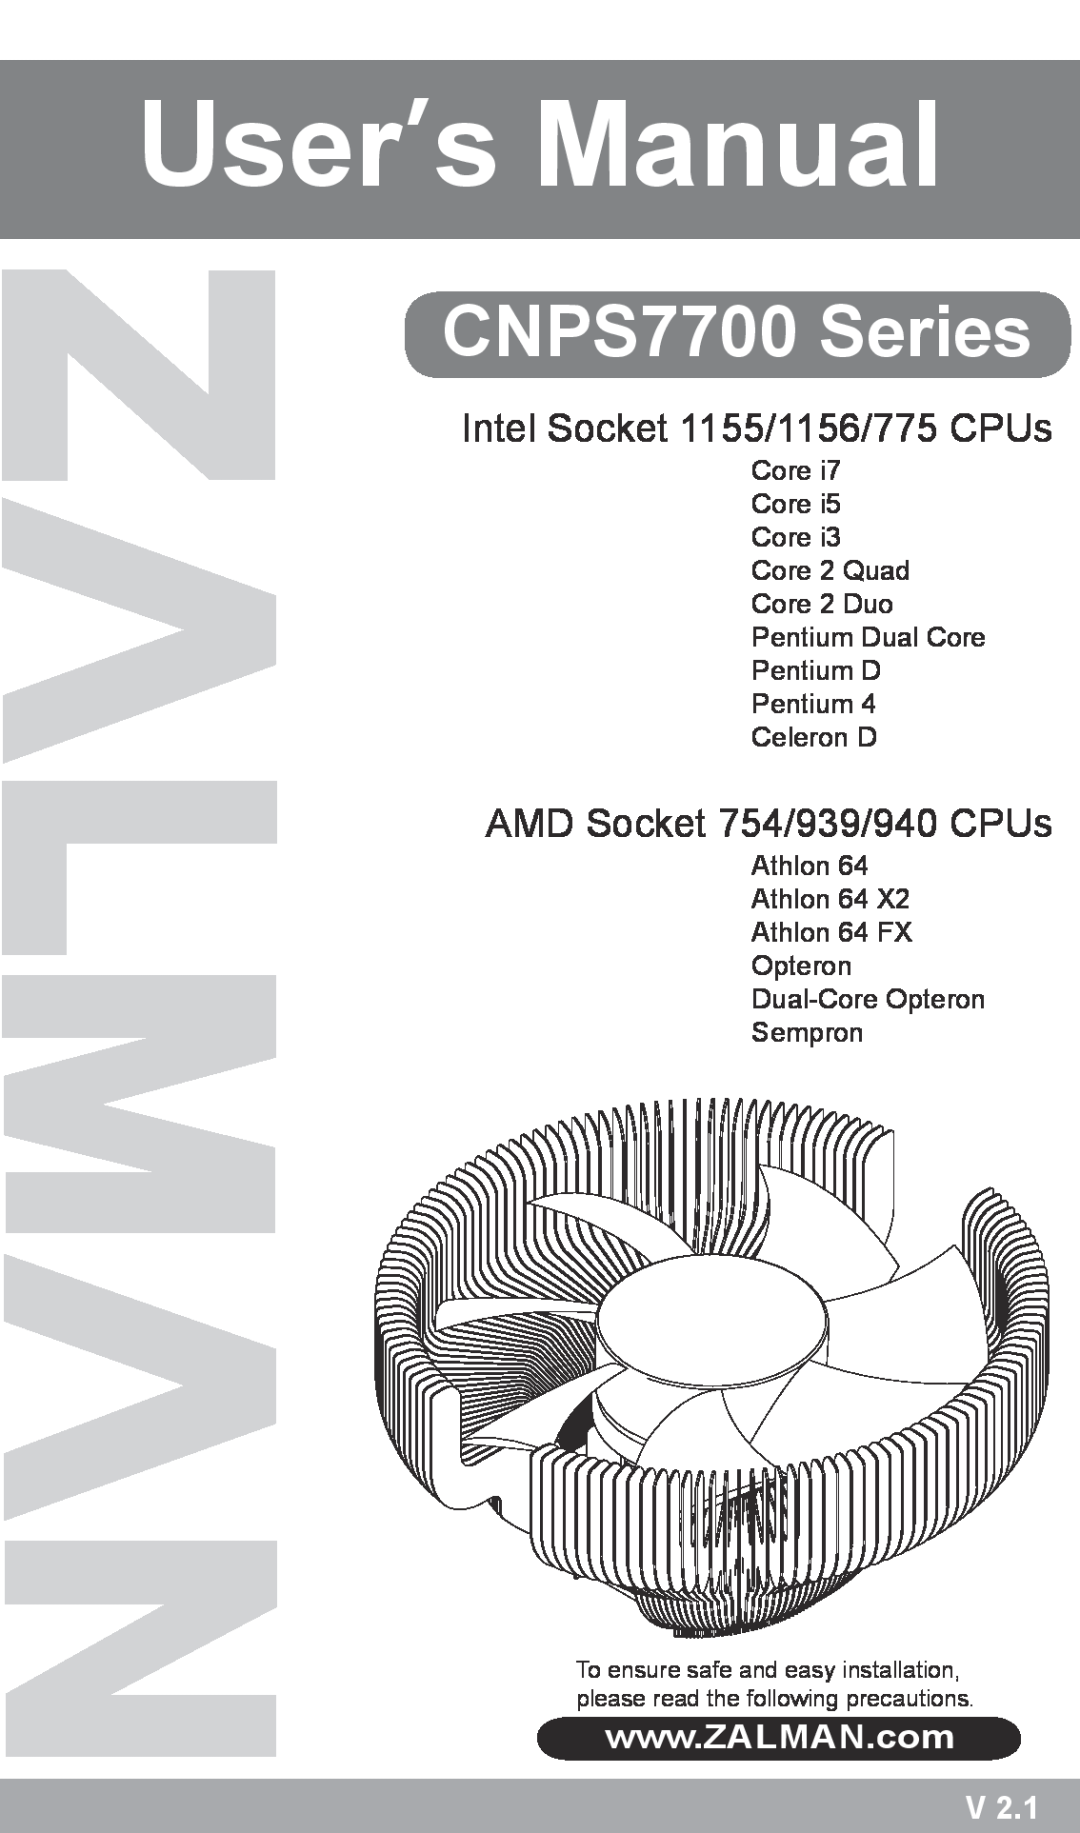 ZALMAN user manual Intel Socket 1155/1156/775 CPUs, AMD Socket 754/939/940 CPUs, User’s Manual, CNPS7700 Series 